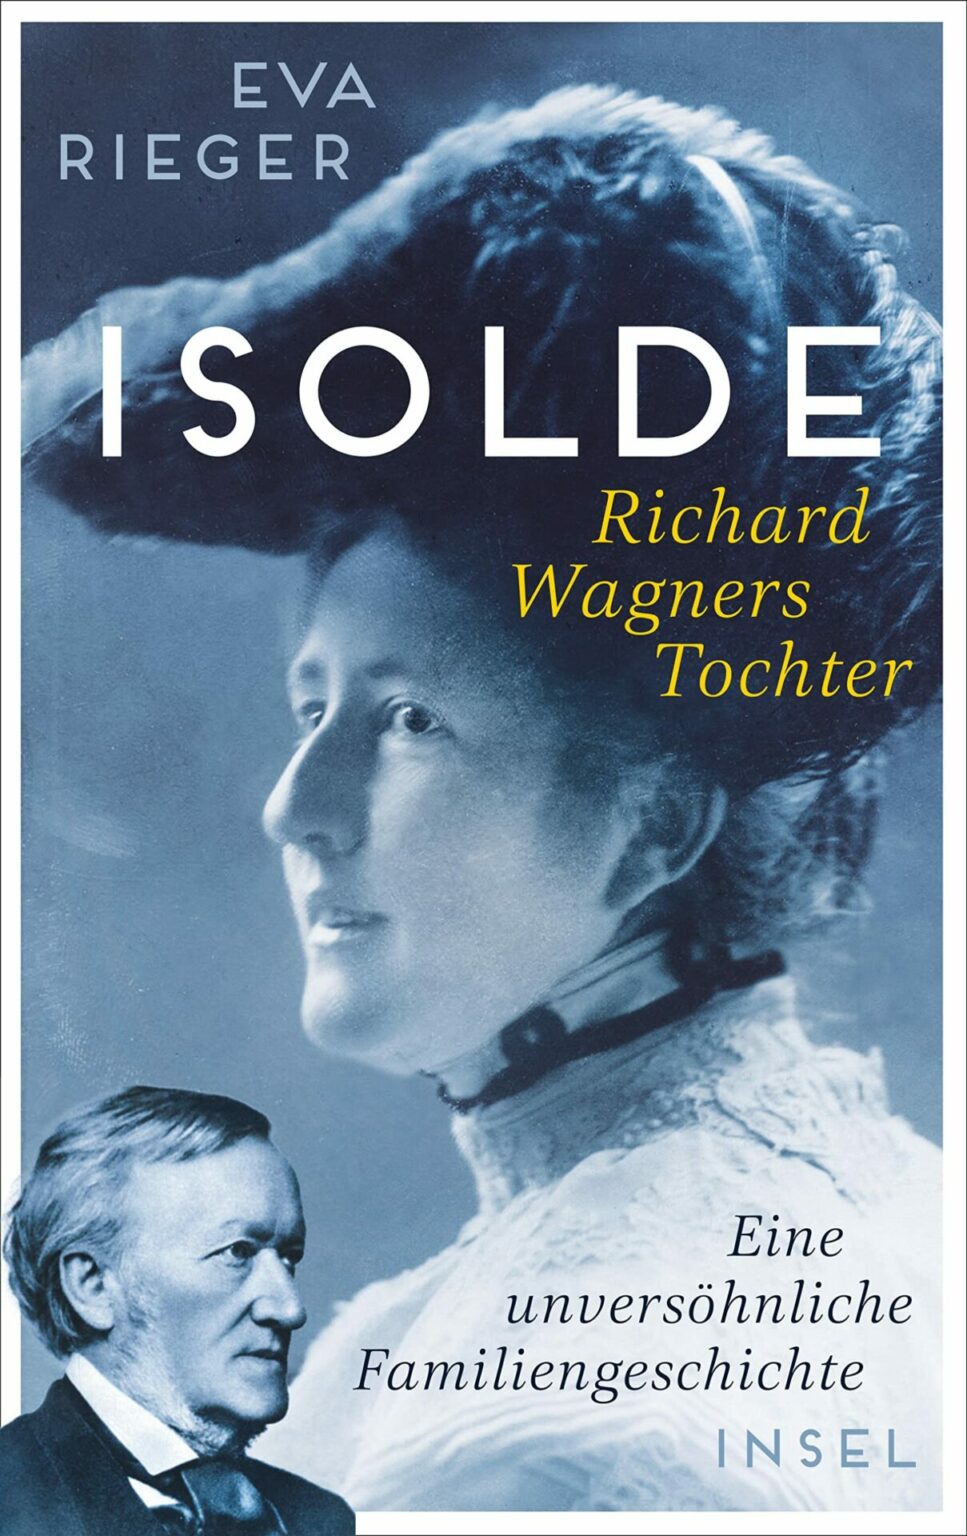 Ein beschädigtes Leben: Richard Wagners Tochter Isolde